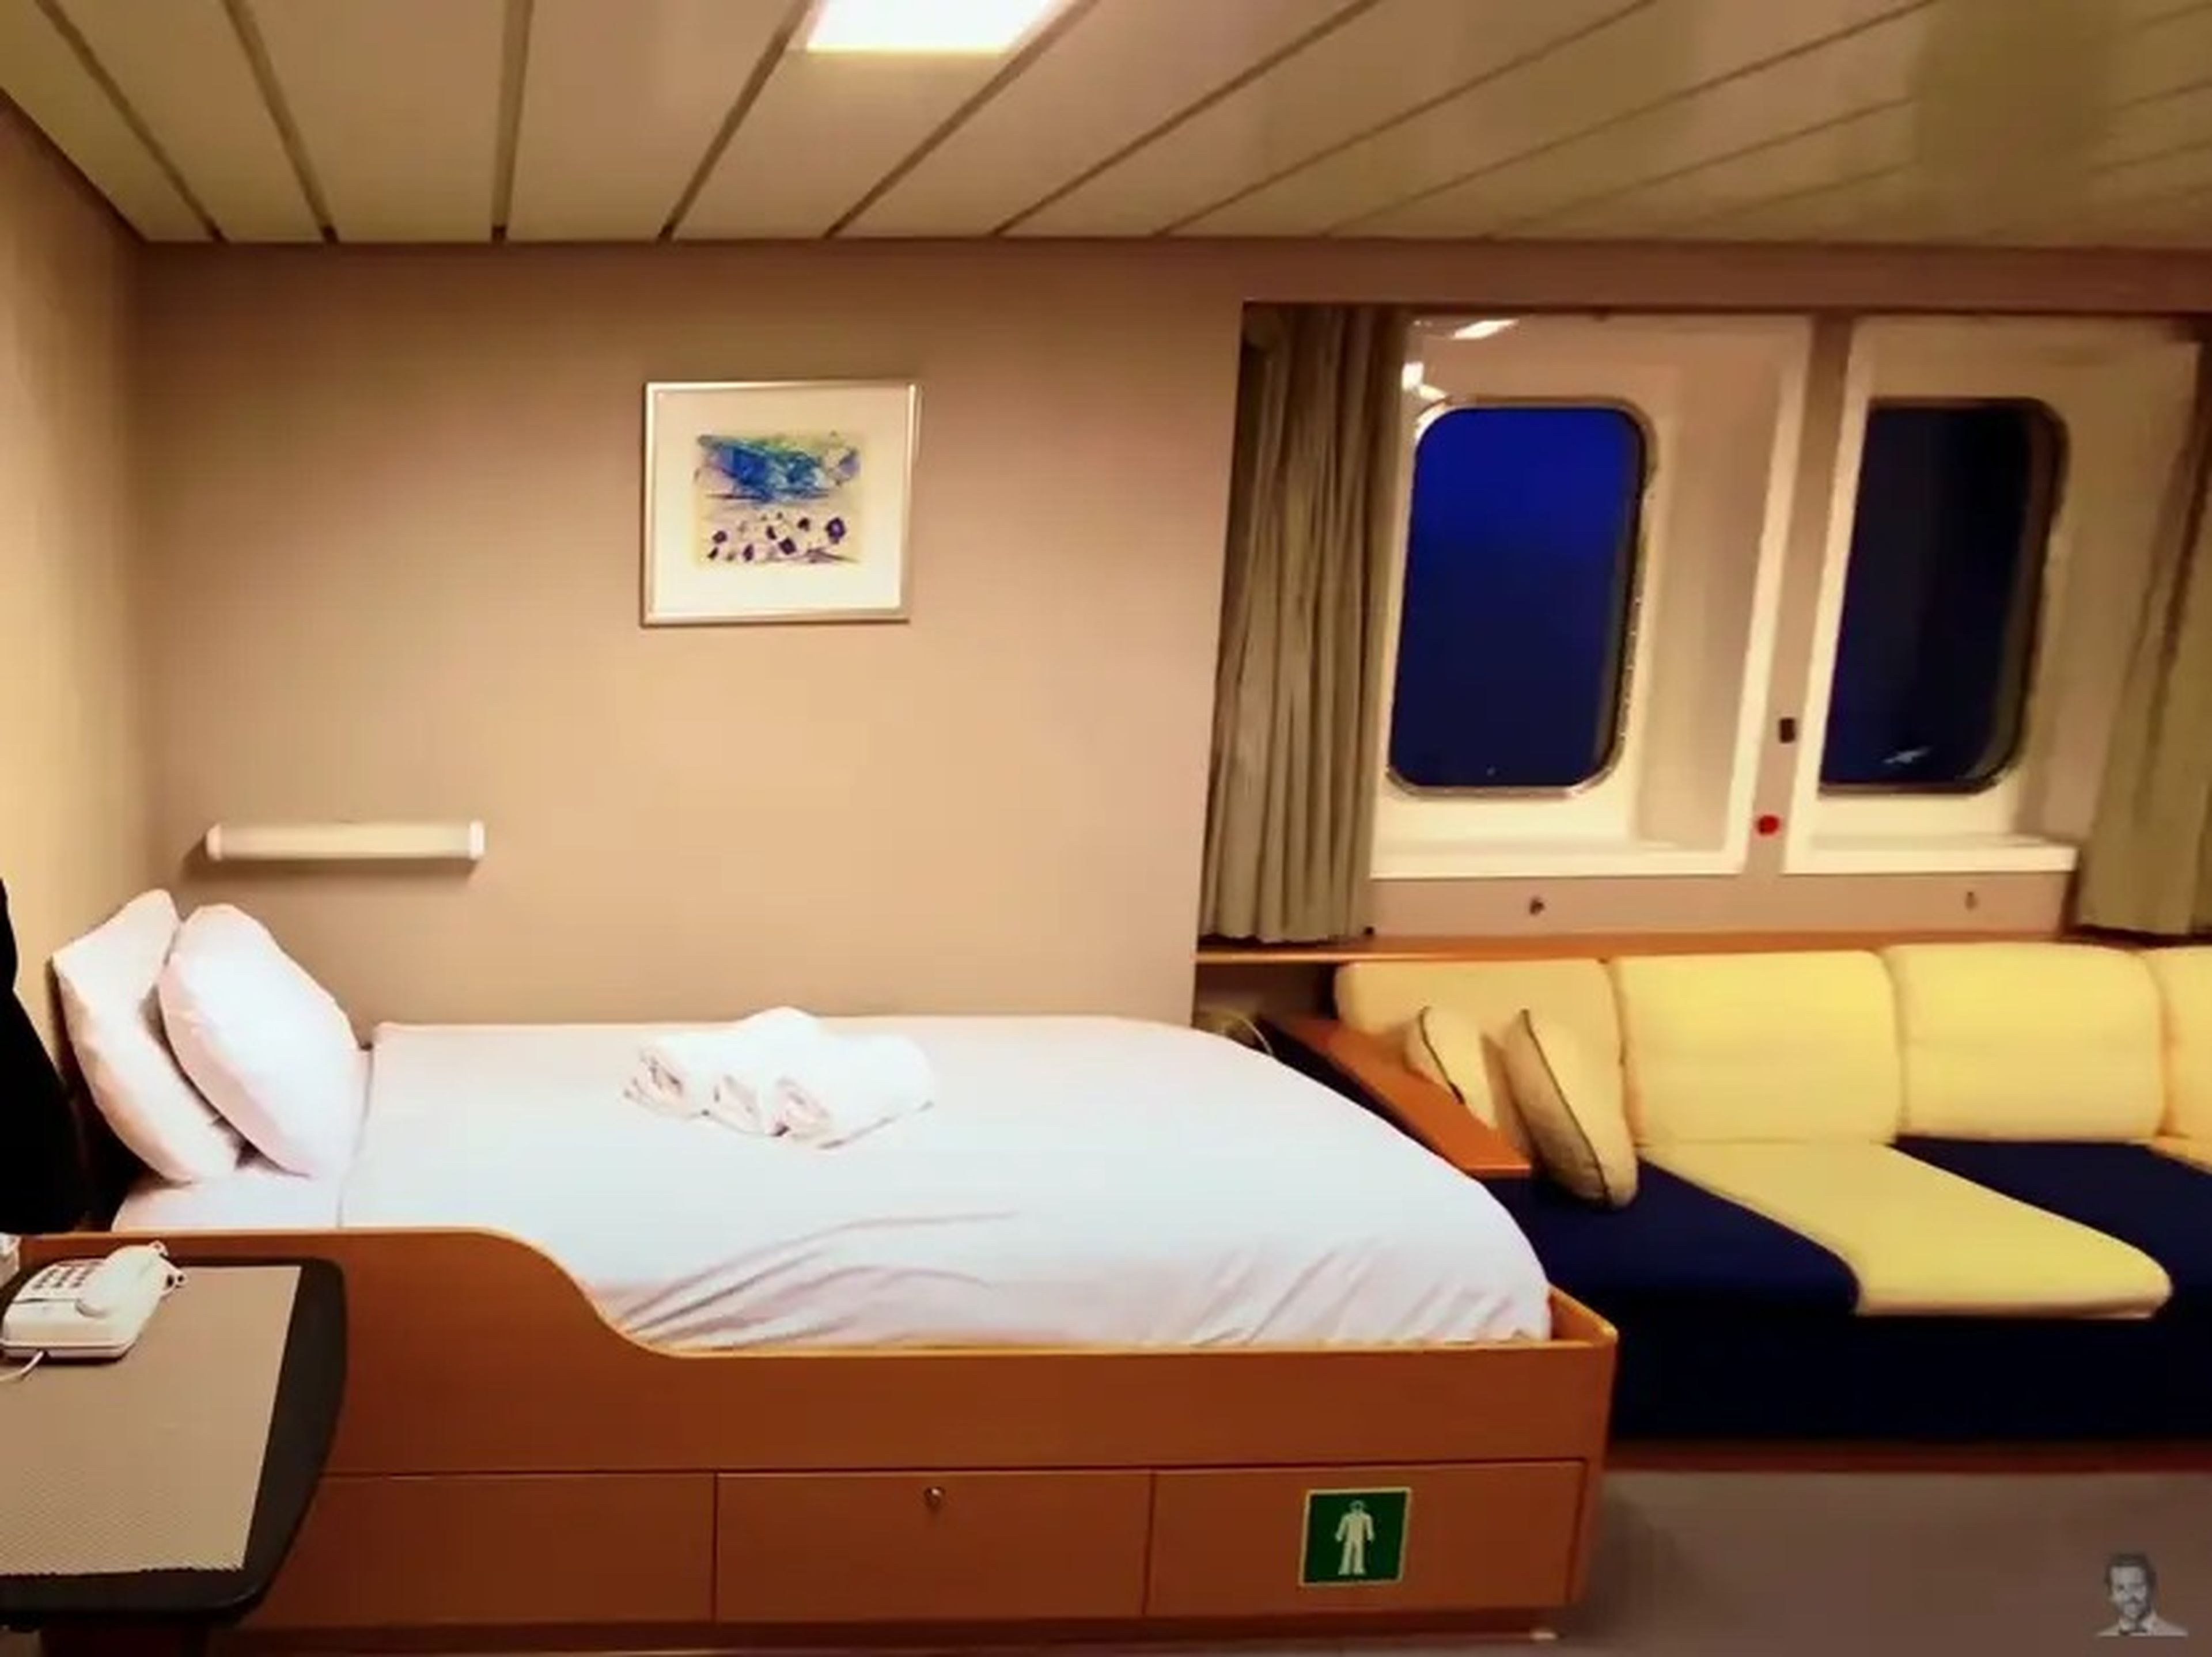 Boyle's living quarters on the ship